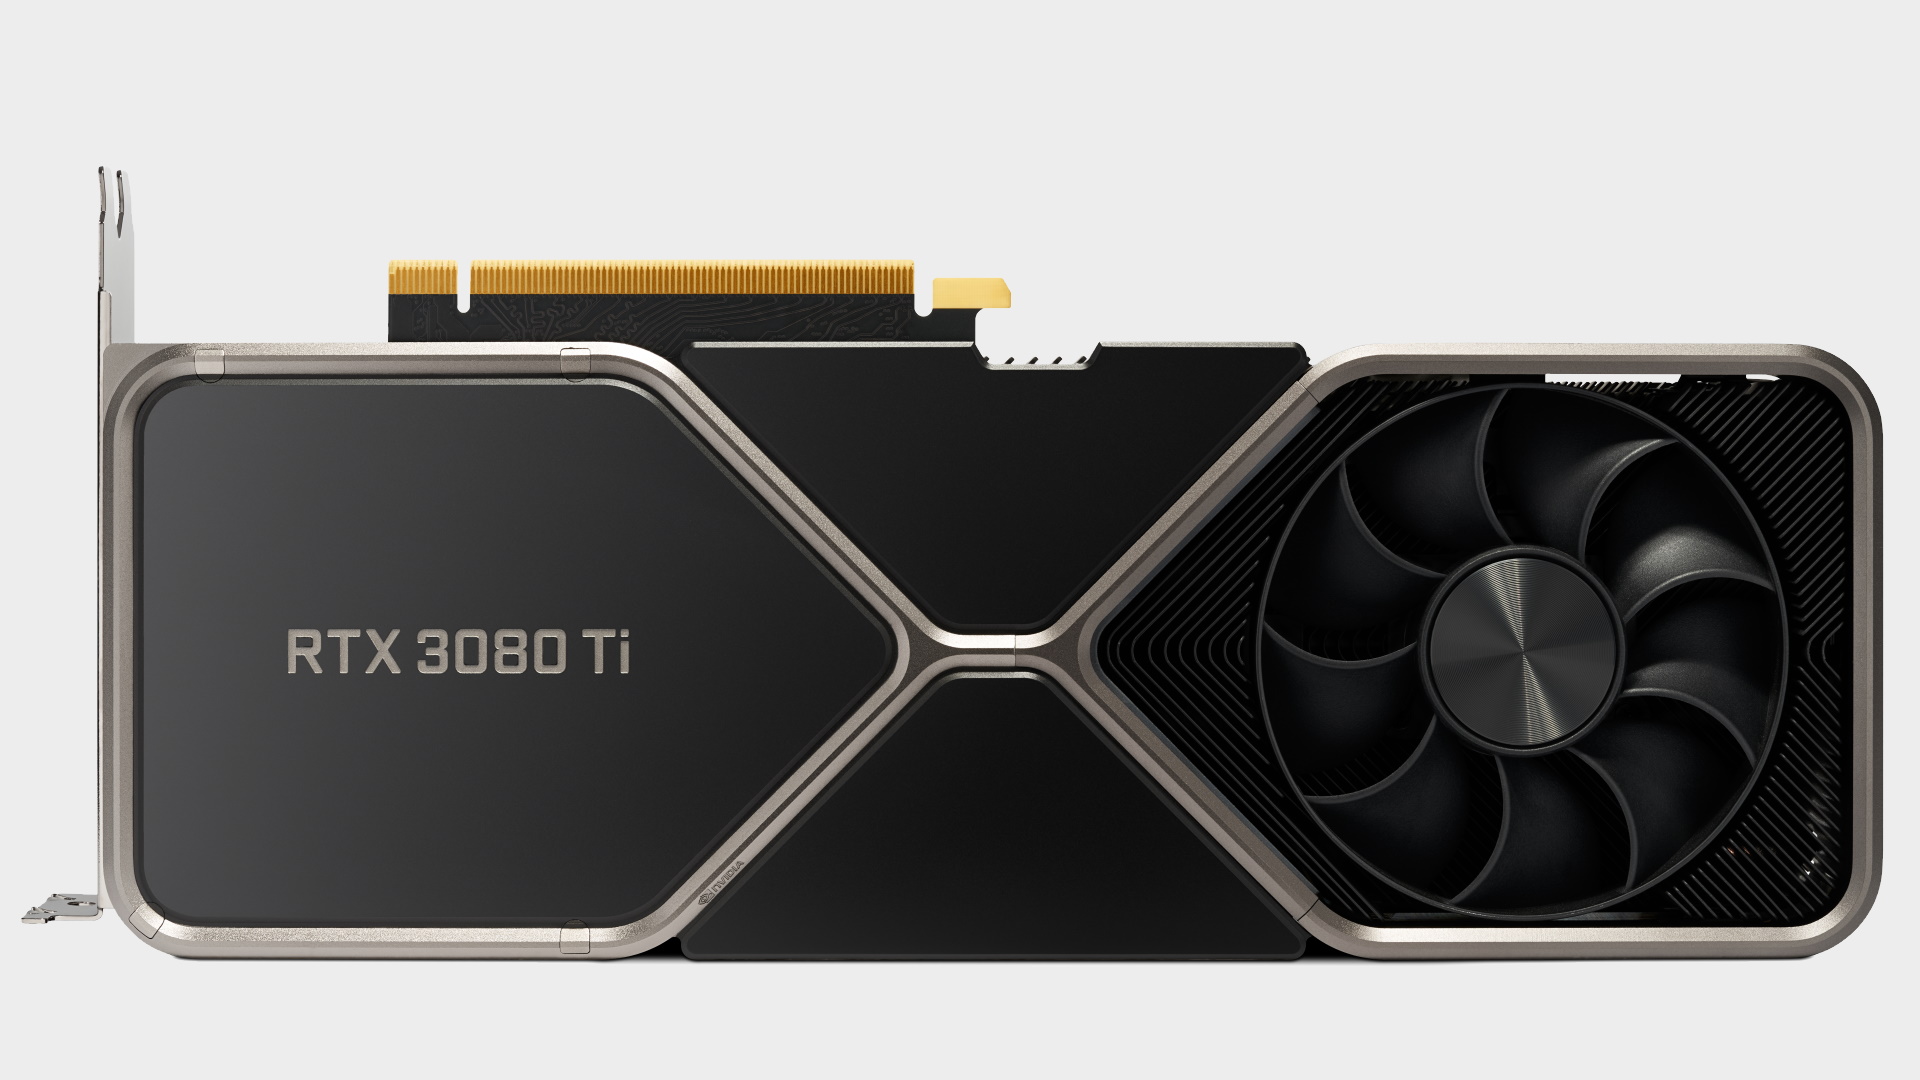 Nvidia GeForce RTX 3080 Ti GPU on a gray background.